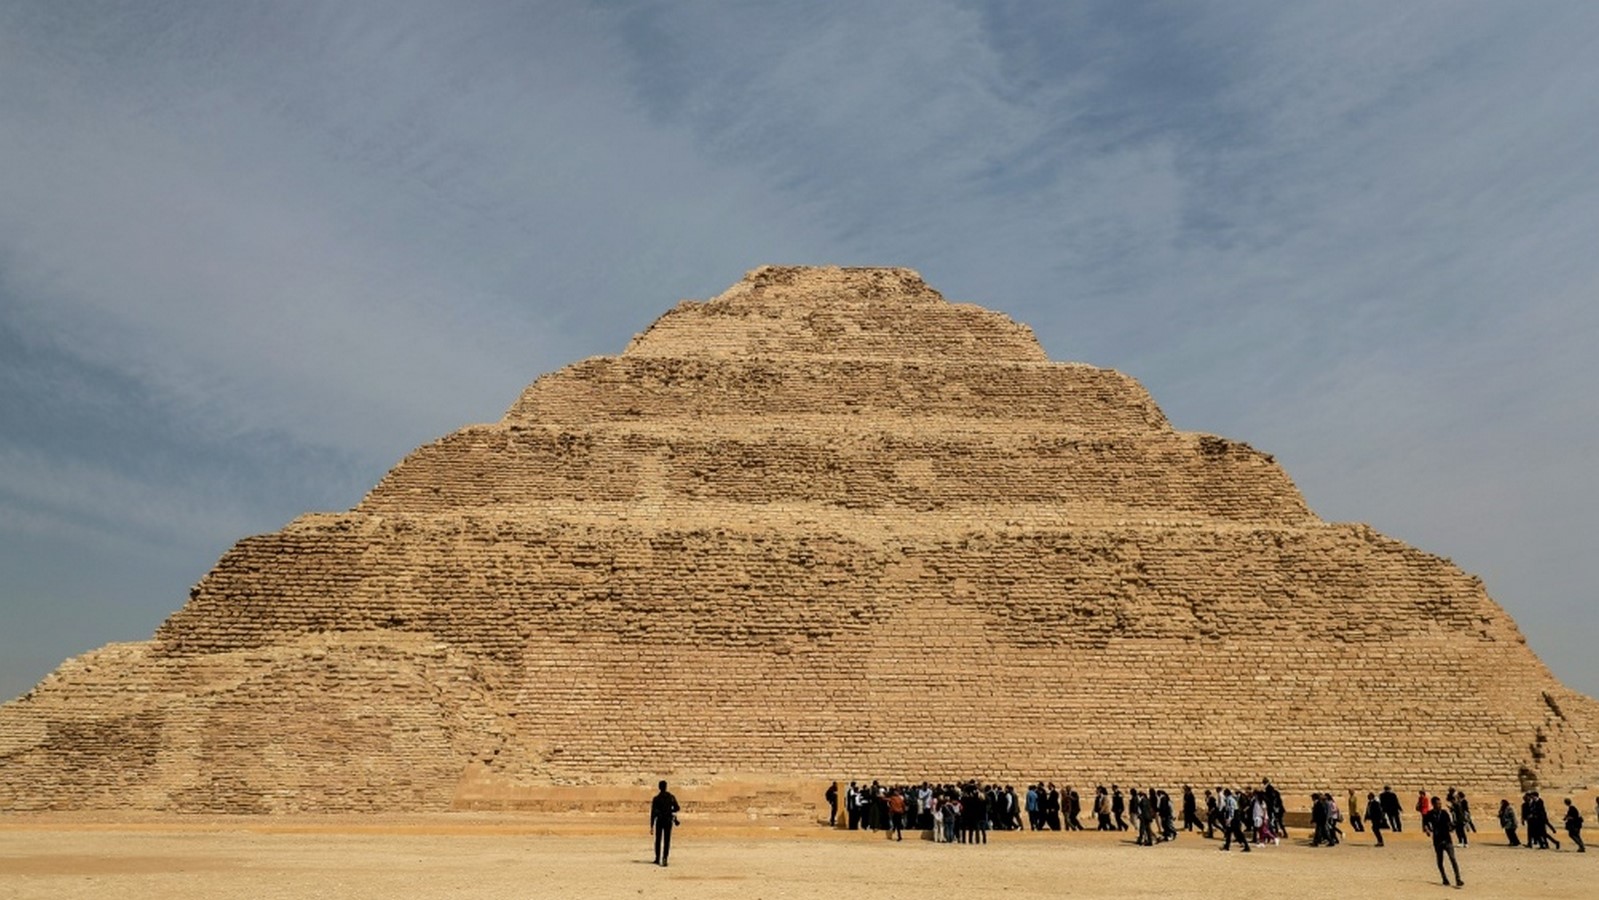 An overview of Pyramids - Sheet